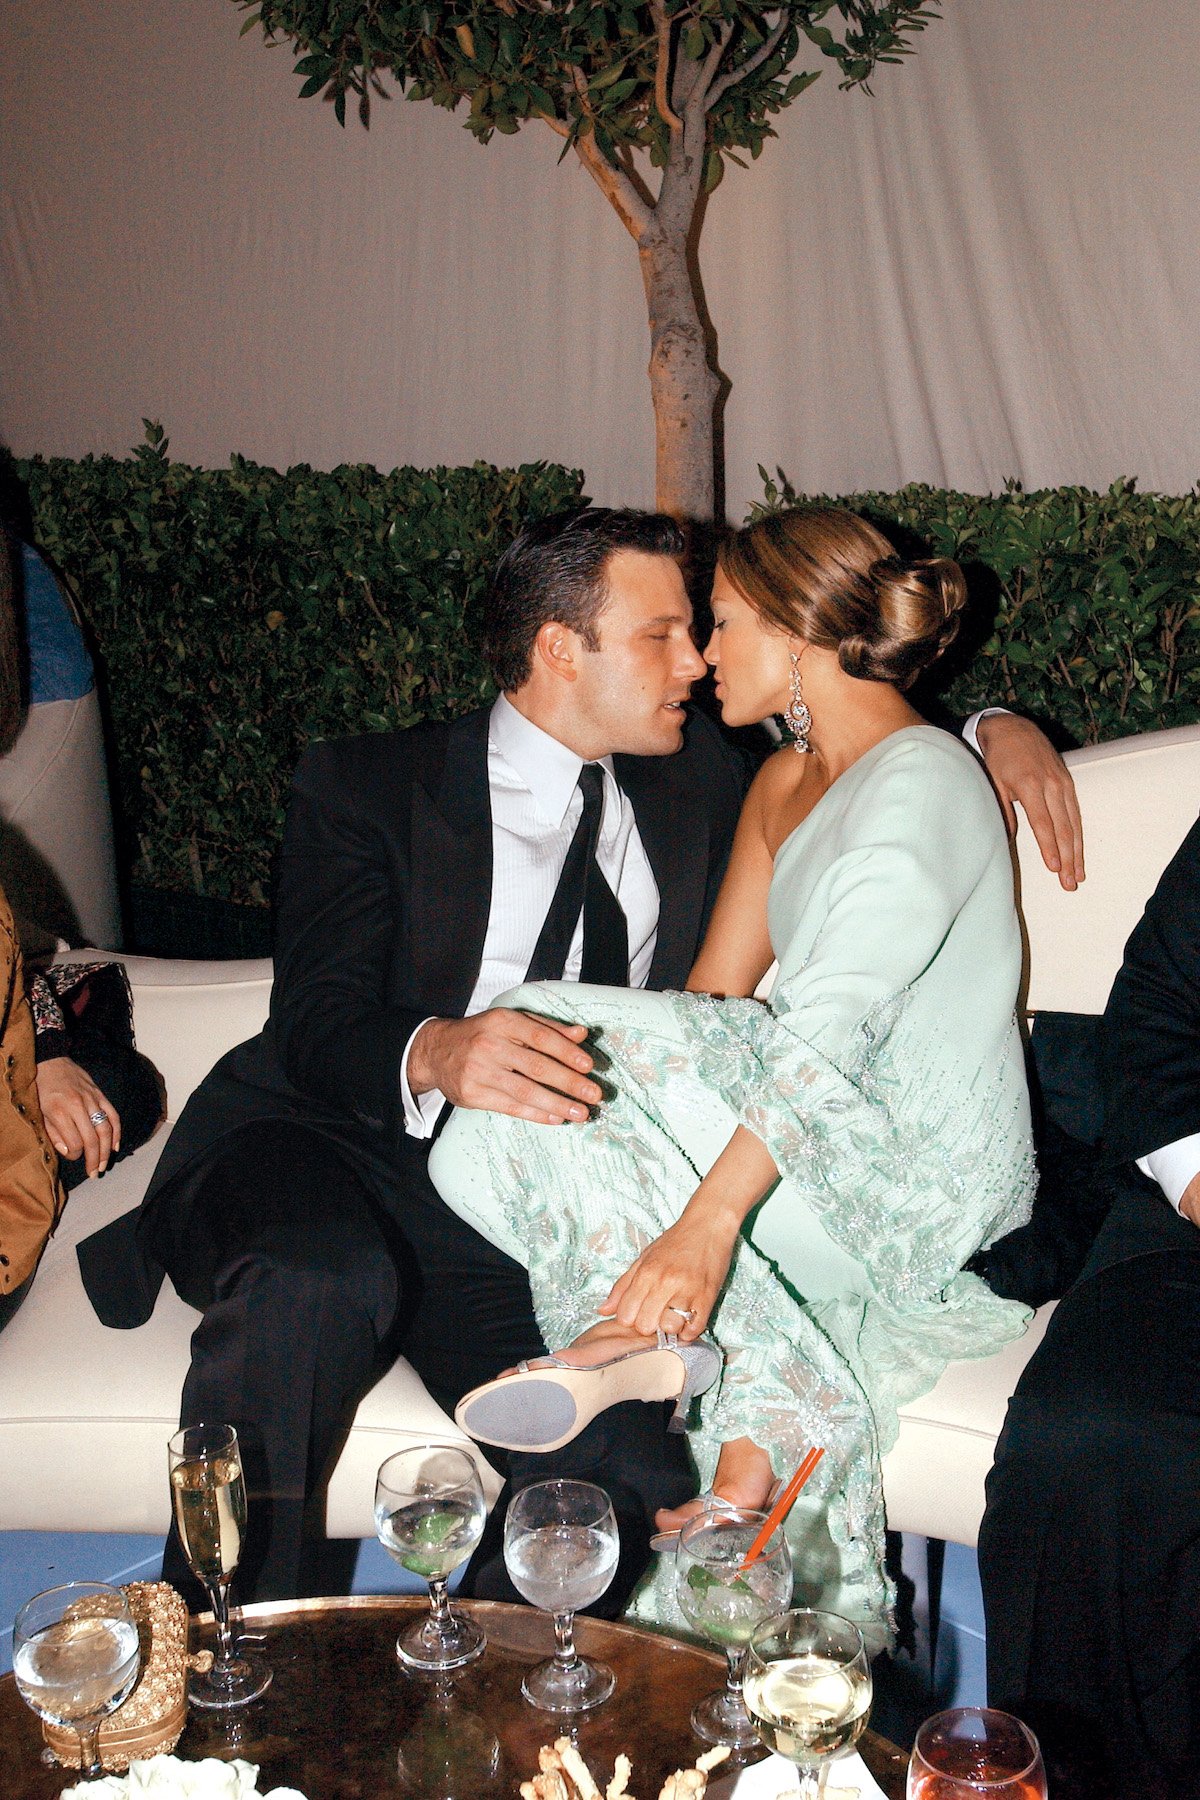 Ben Affleck sits with his arm around Jennifer Lopez